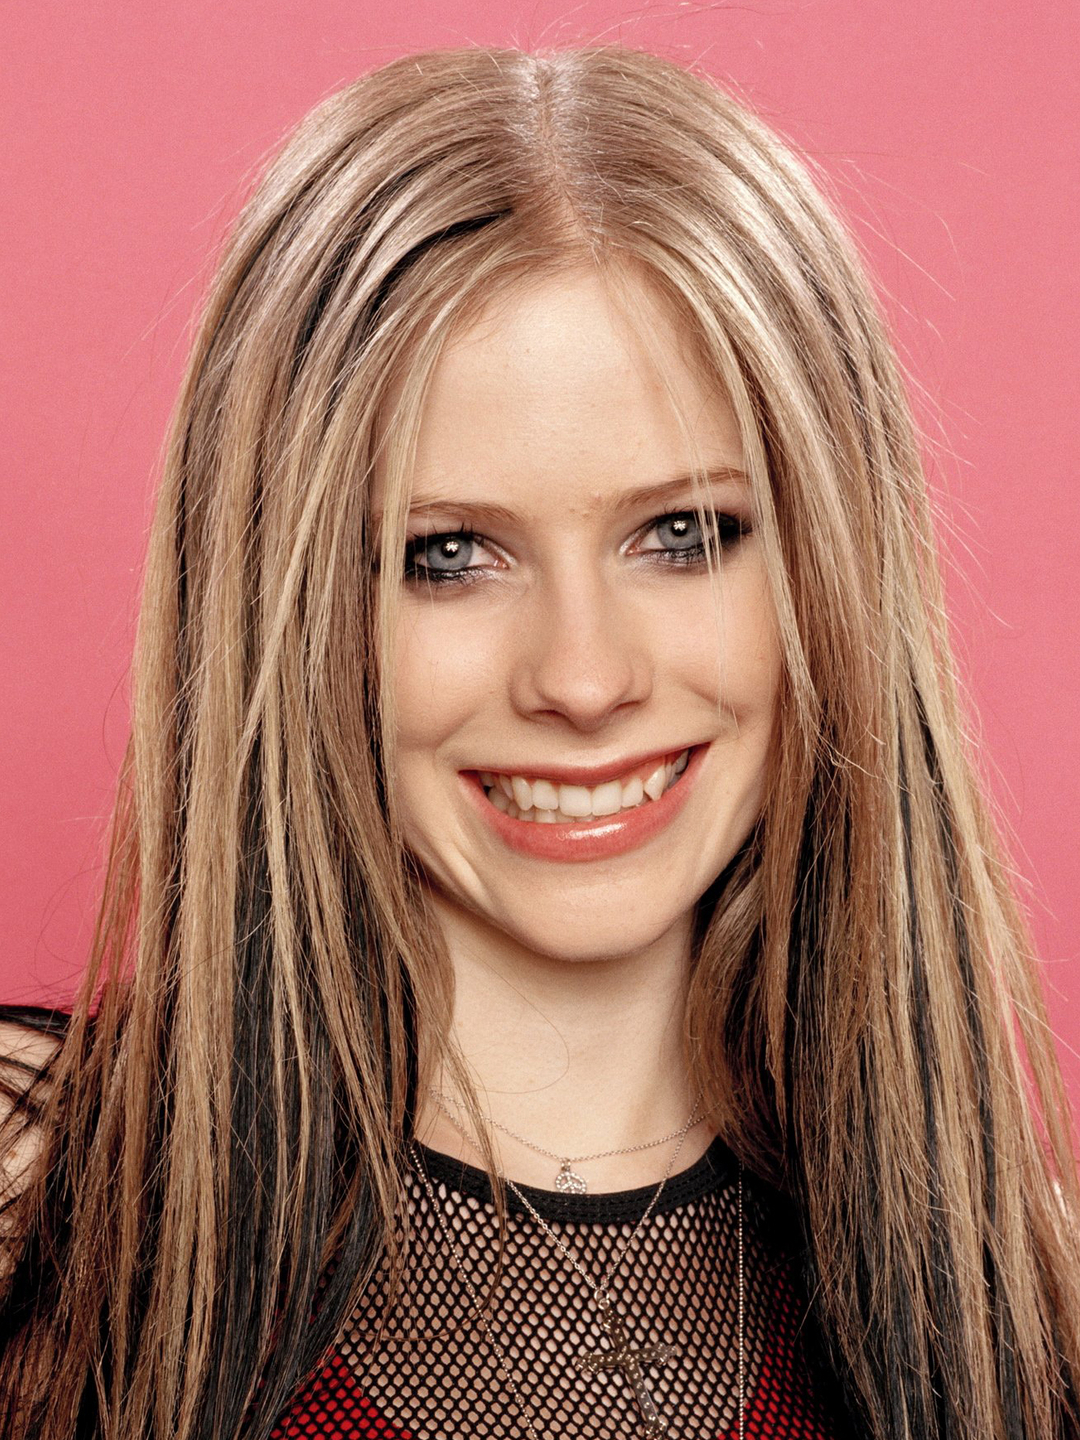 Avril Lavigne story of success